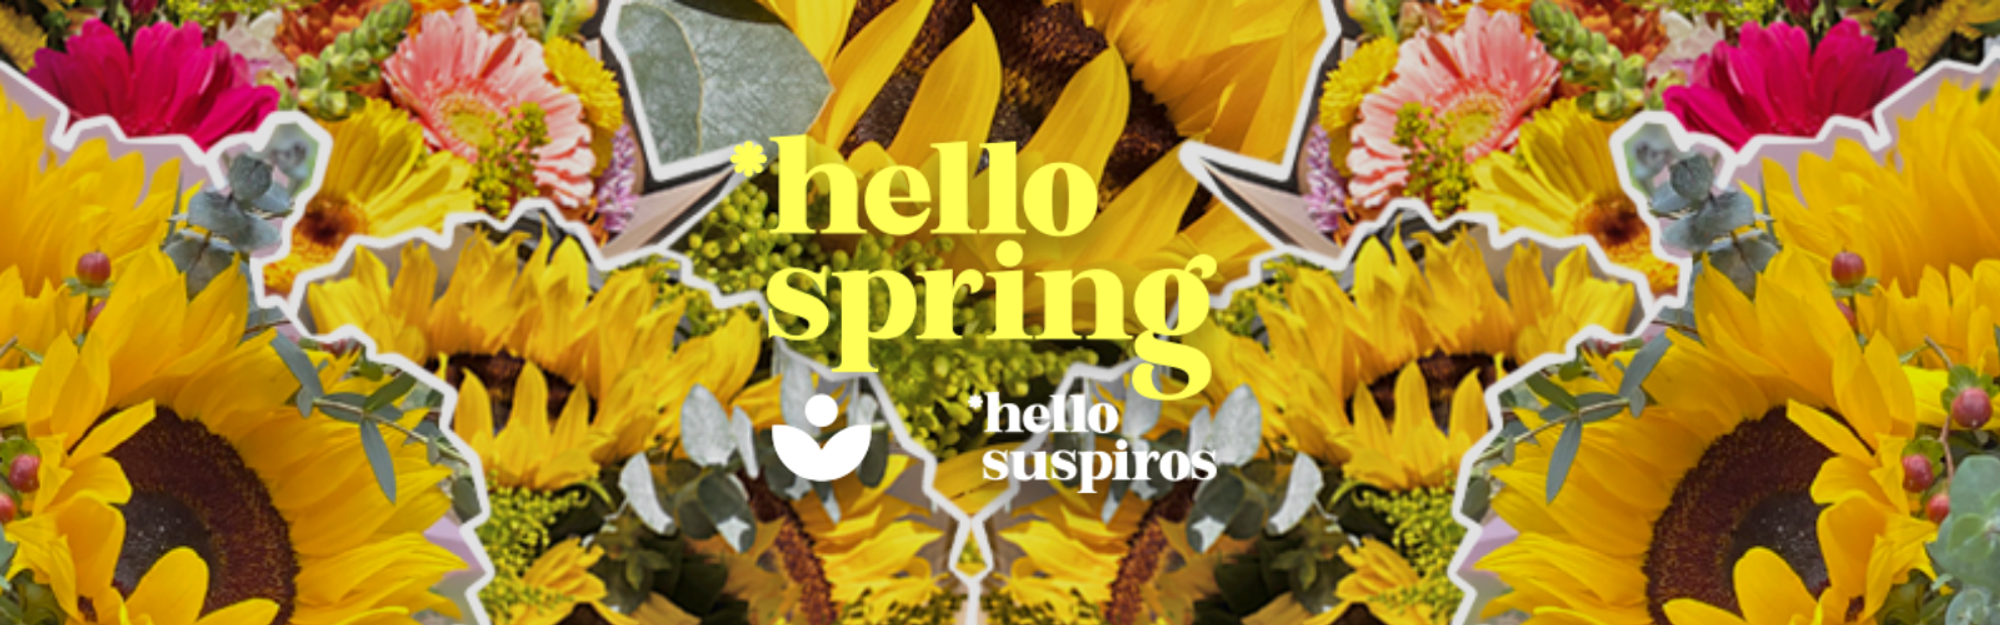 Florería Suspiros - Banner